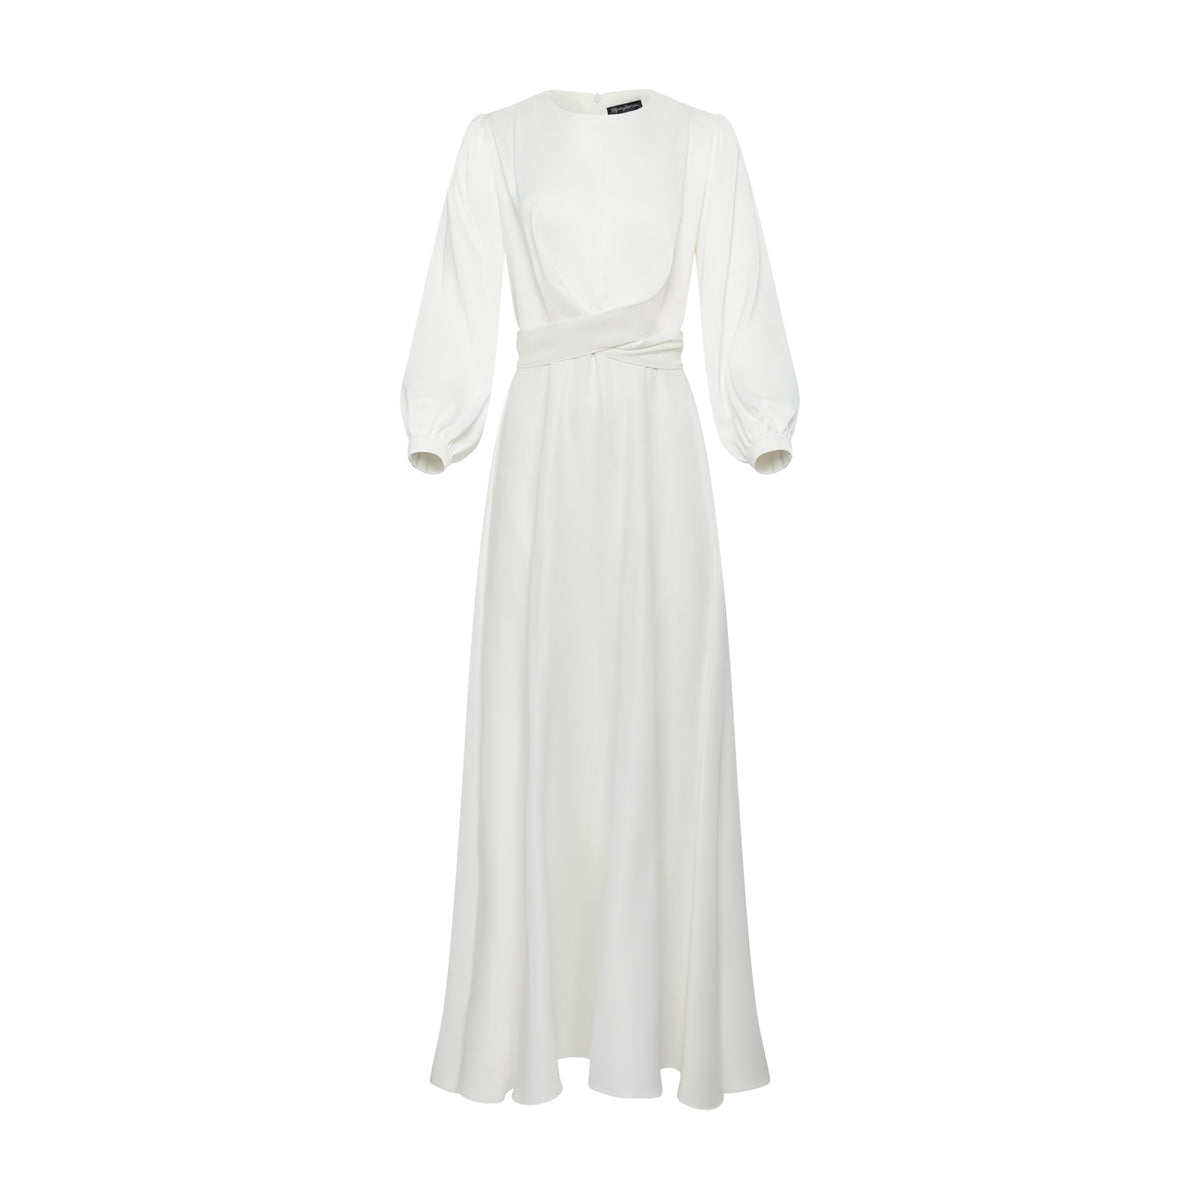 Maysa Satin Dress in White (Limited Edition) – Hijabglamour